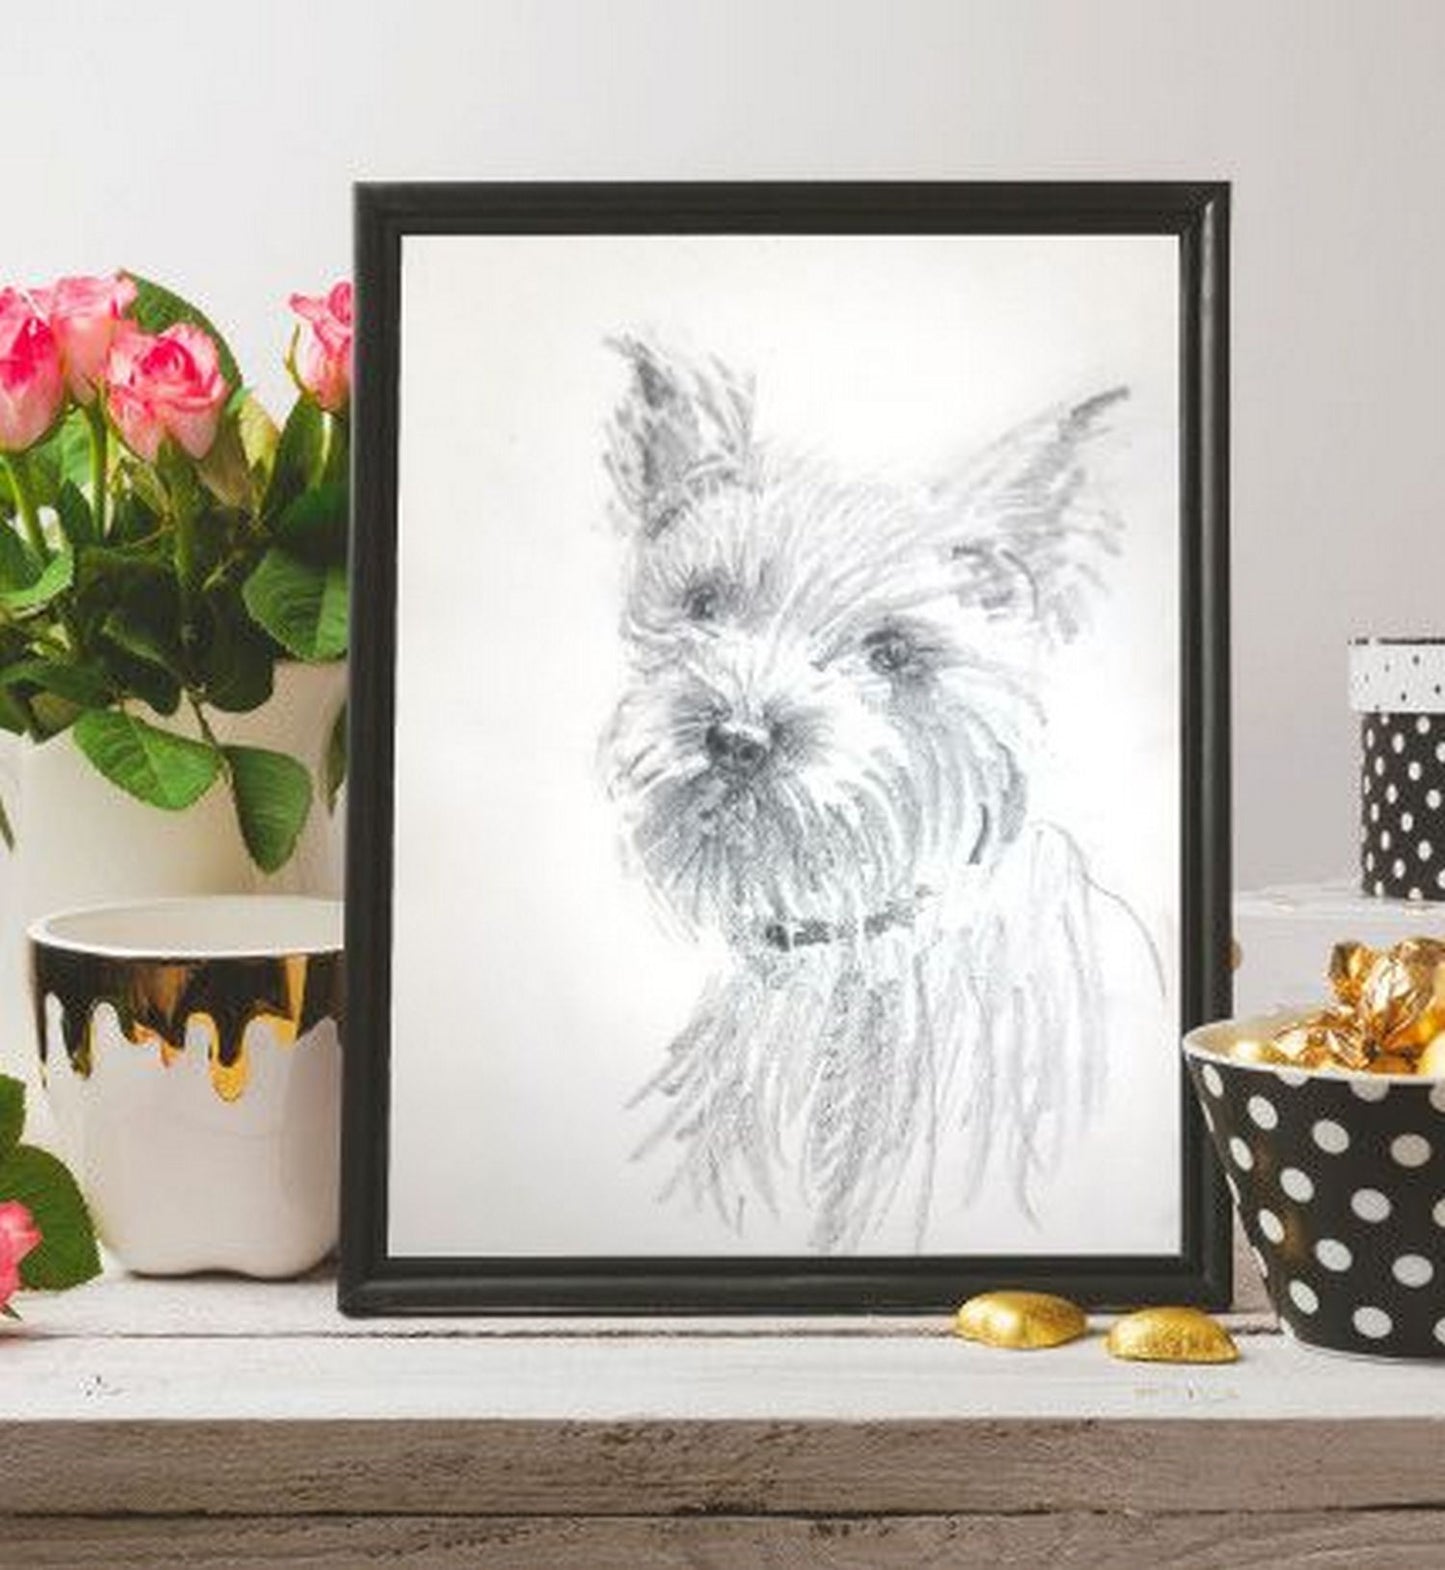 Retrato de mascota Terrier, dibujo a lápiz de perro sobre papel